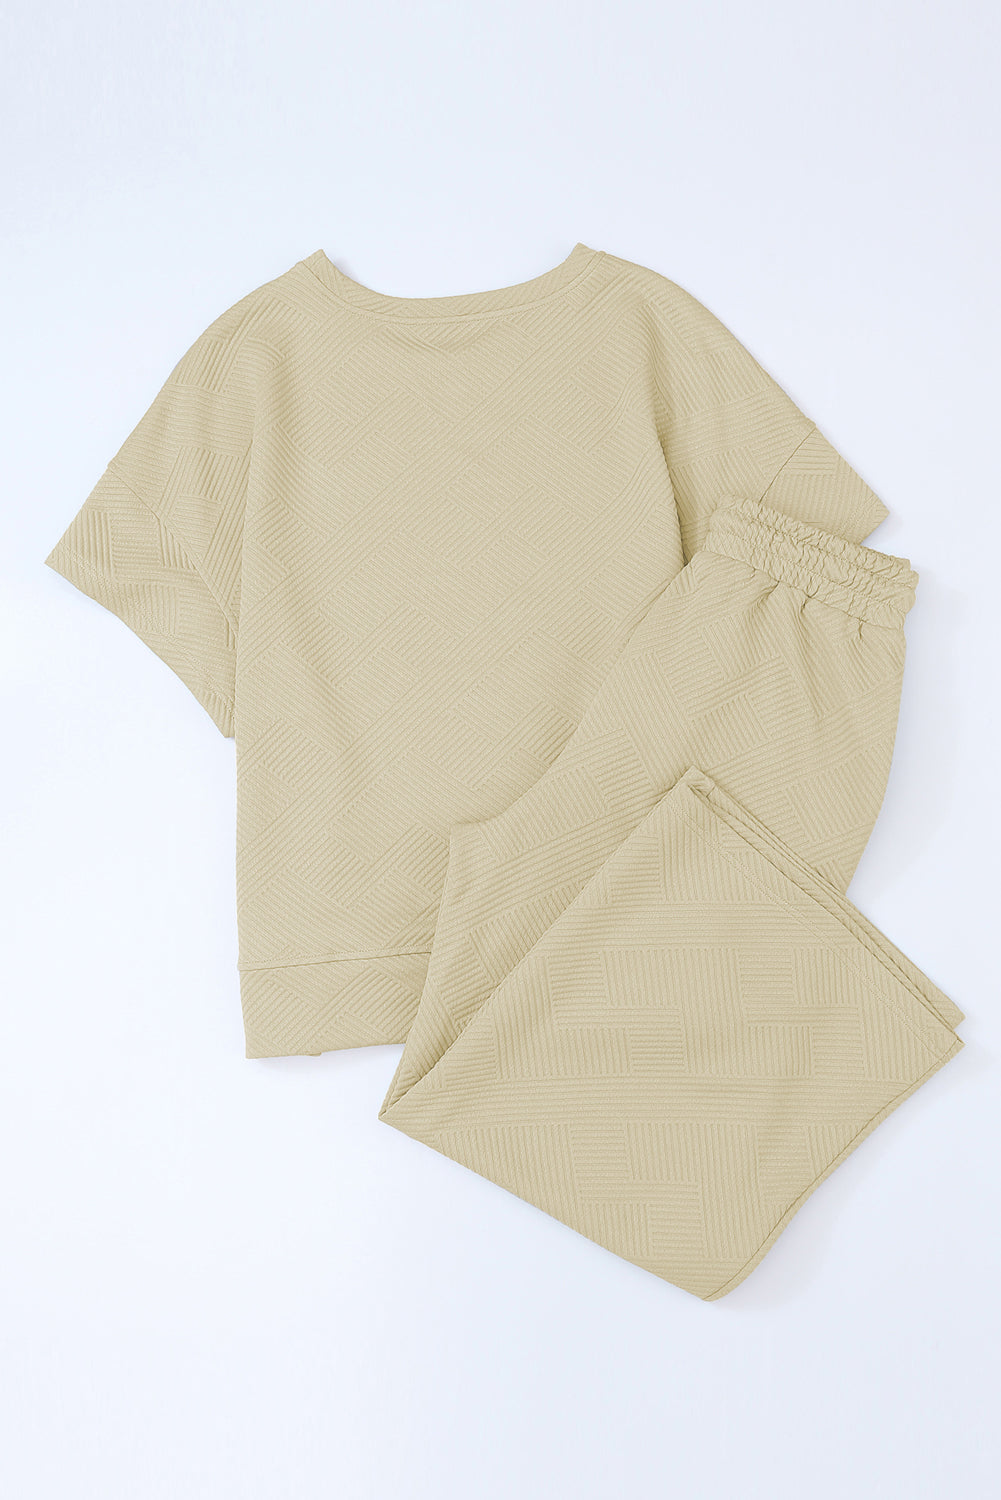 Stylish Apricot Women's T-Shirt & Pants Set - Relaxed Fit